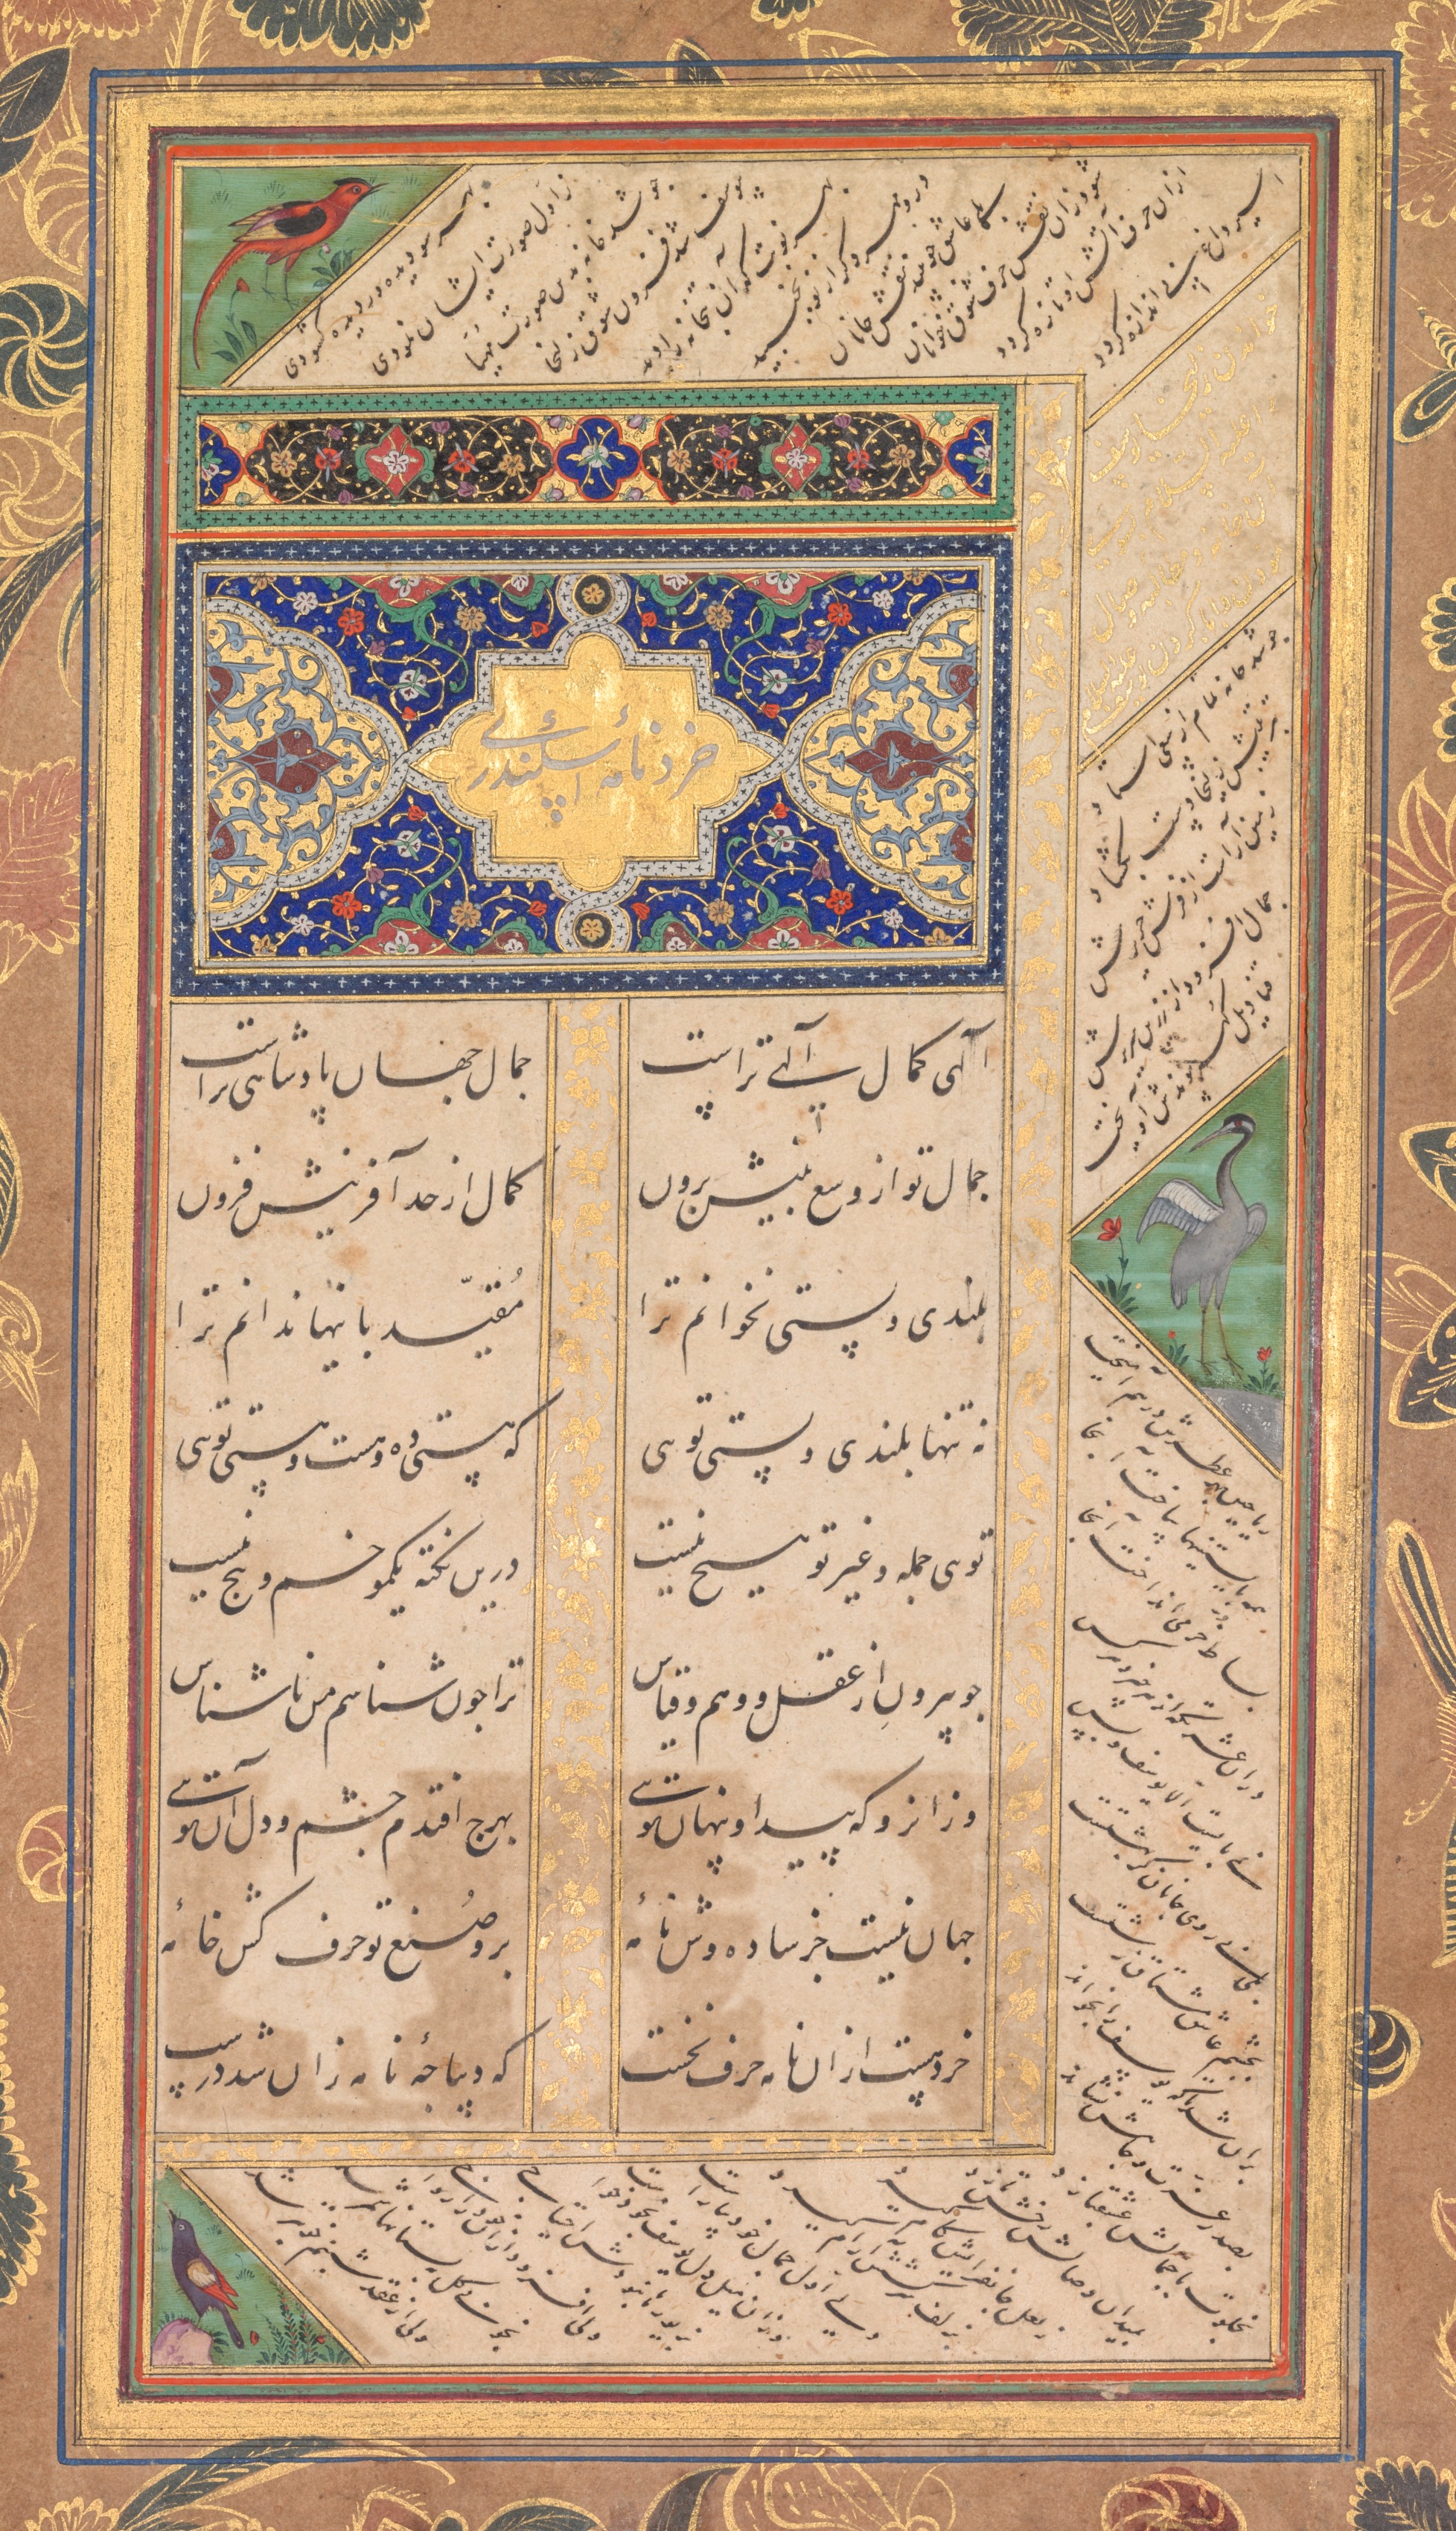 Illuminated page (verso), from a Panj Ganj (Five Treasures) of Abd al- Rahman Jami (Persian, 1414–1492) with two Persian masnavis: Yusuf va Zulaykha (Joseph and Zulaykha) and Khirad-nama-i Iskandari (Alexander’s Book of Wisdom)